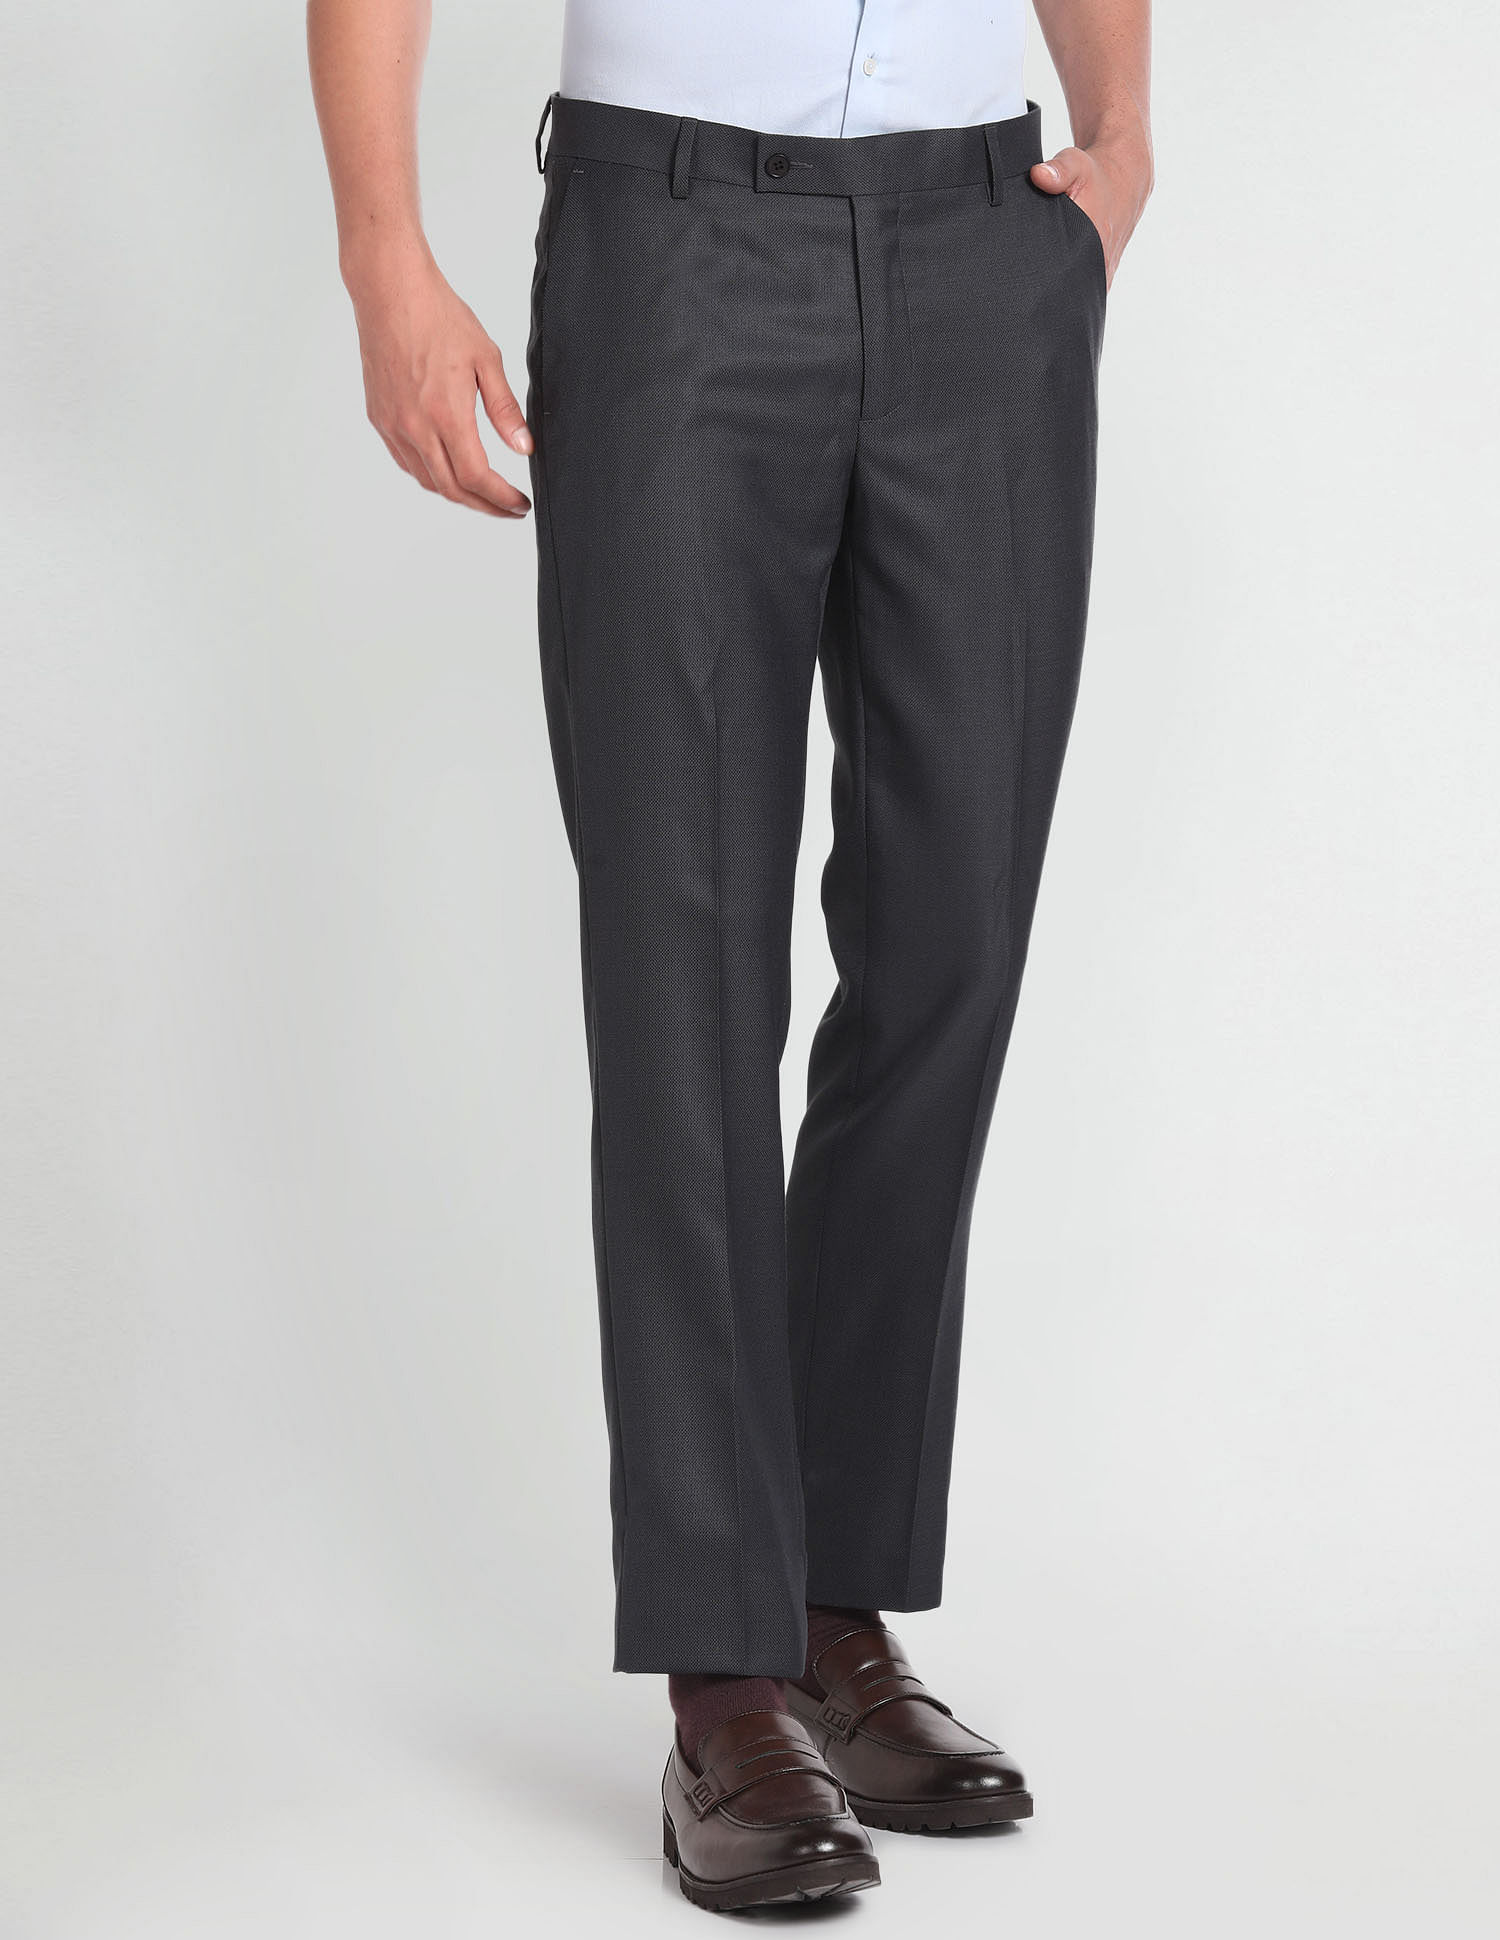 Jeans & Pants | ARROW Brand Formal Pant For Men | Freeup